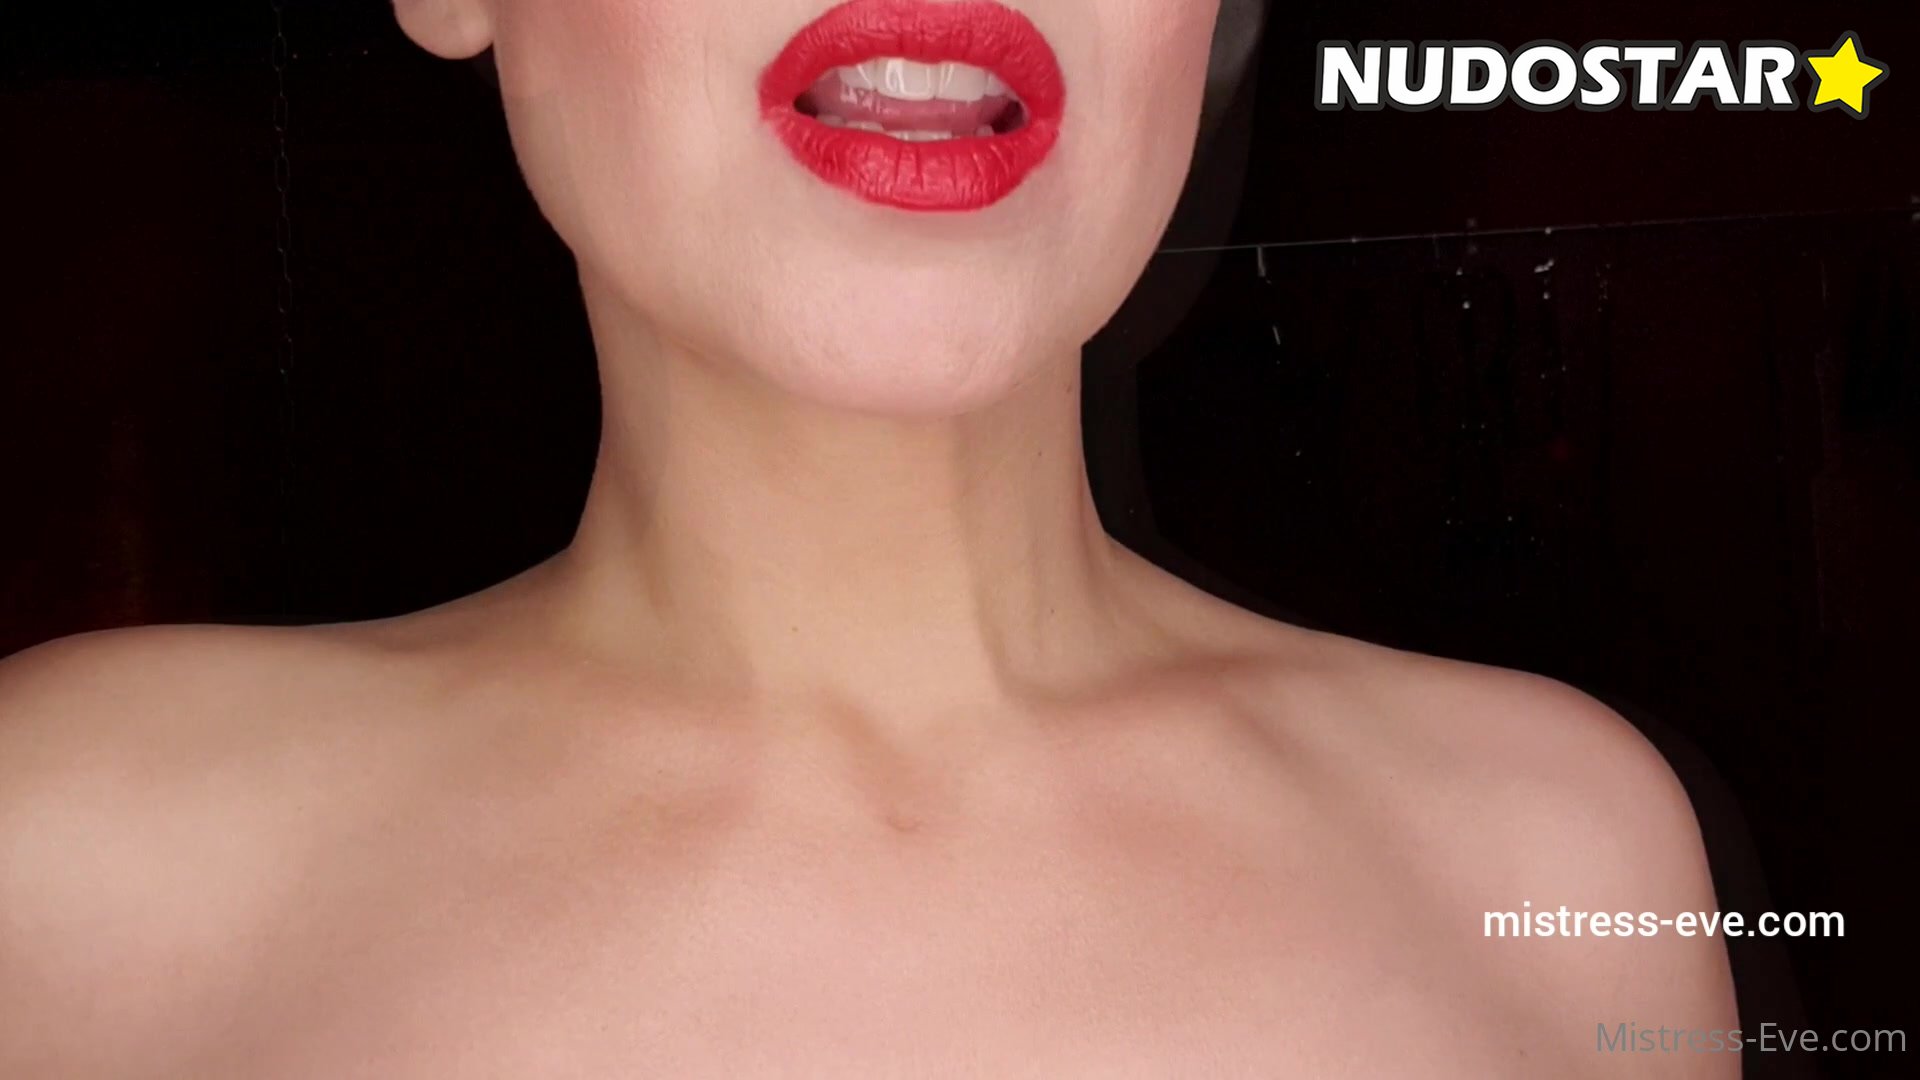 video_mistress-eve_nude_leaks_nudostar.com_002.jpg